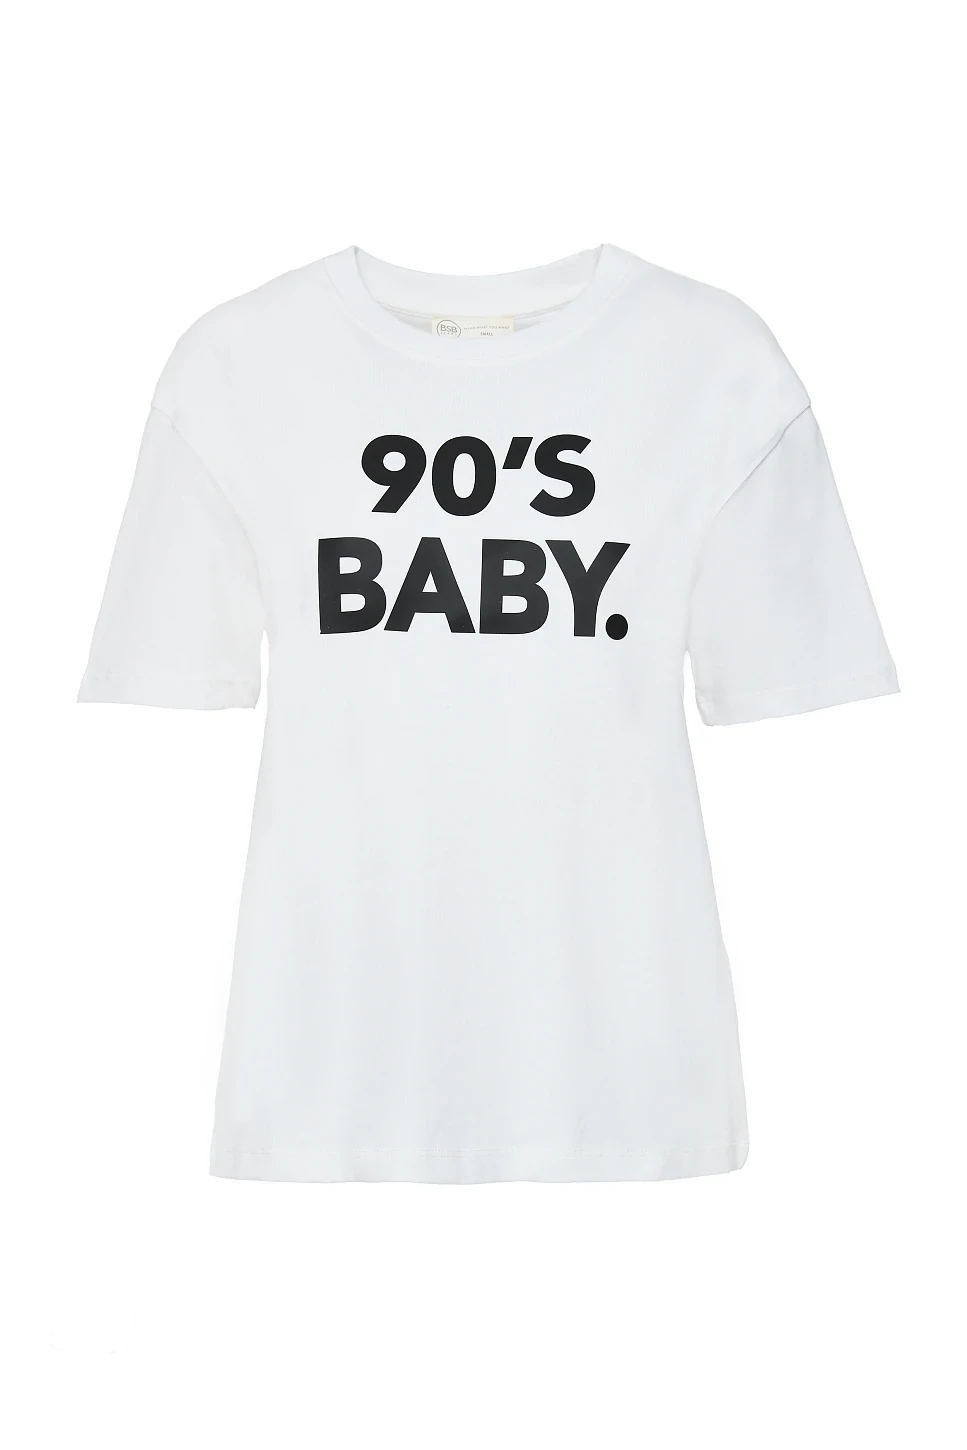 BSB 90’S T-shirt White